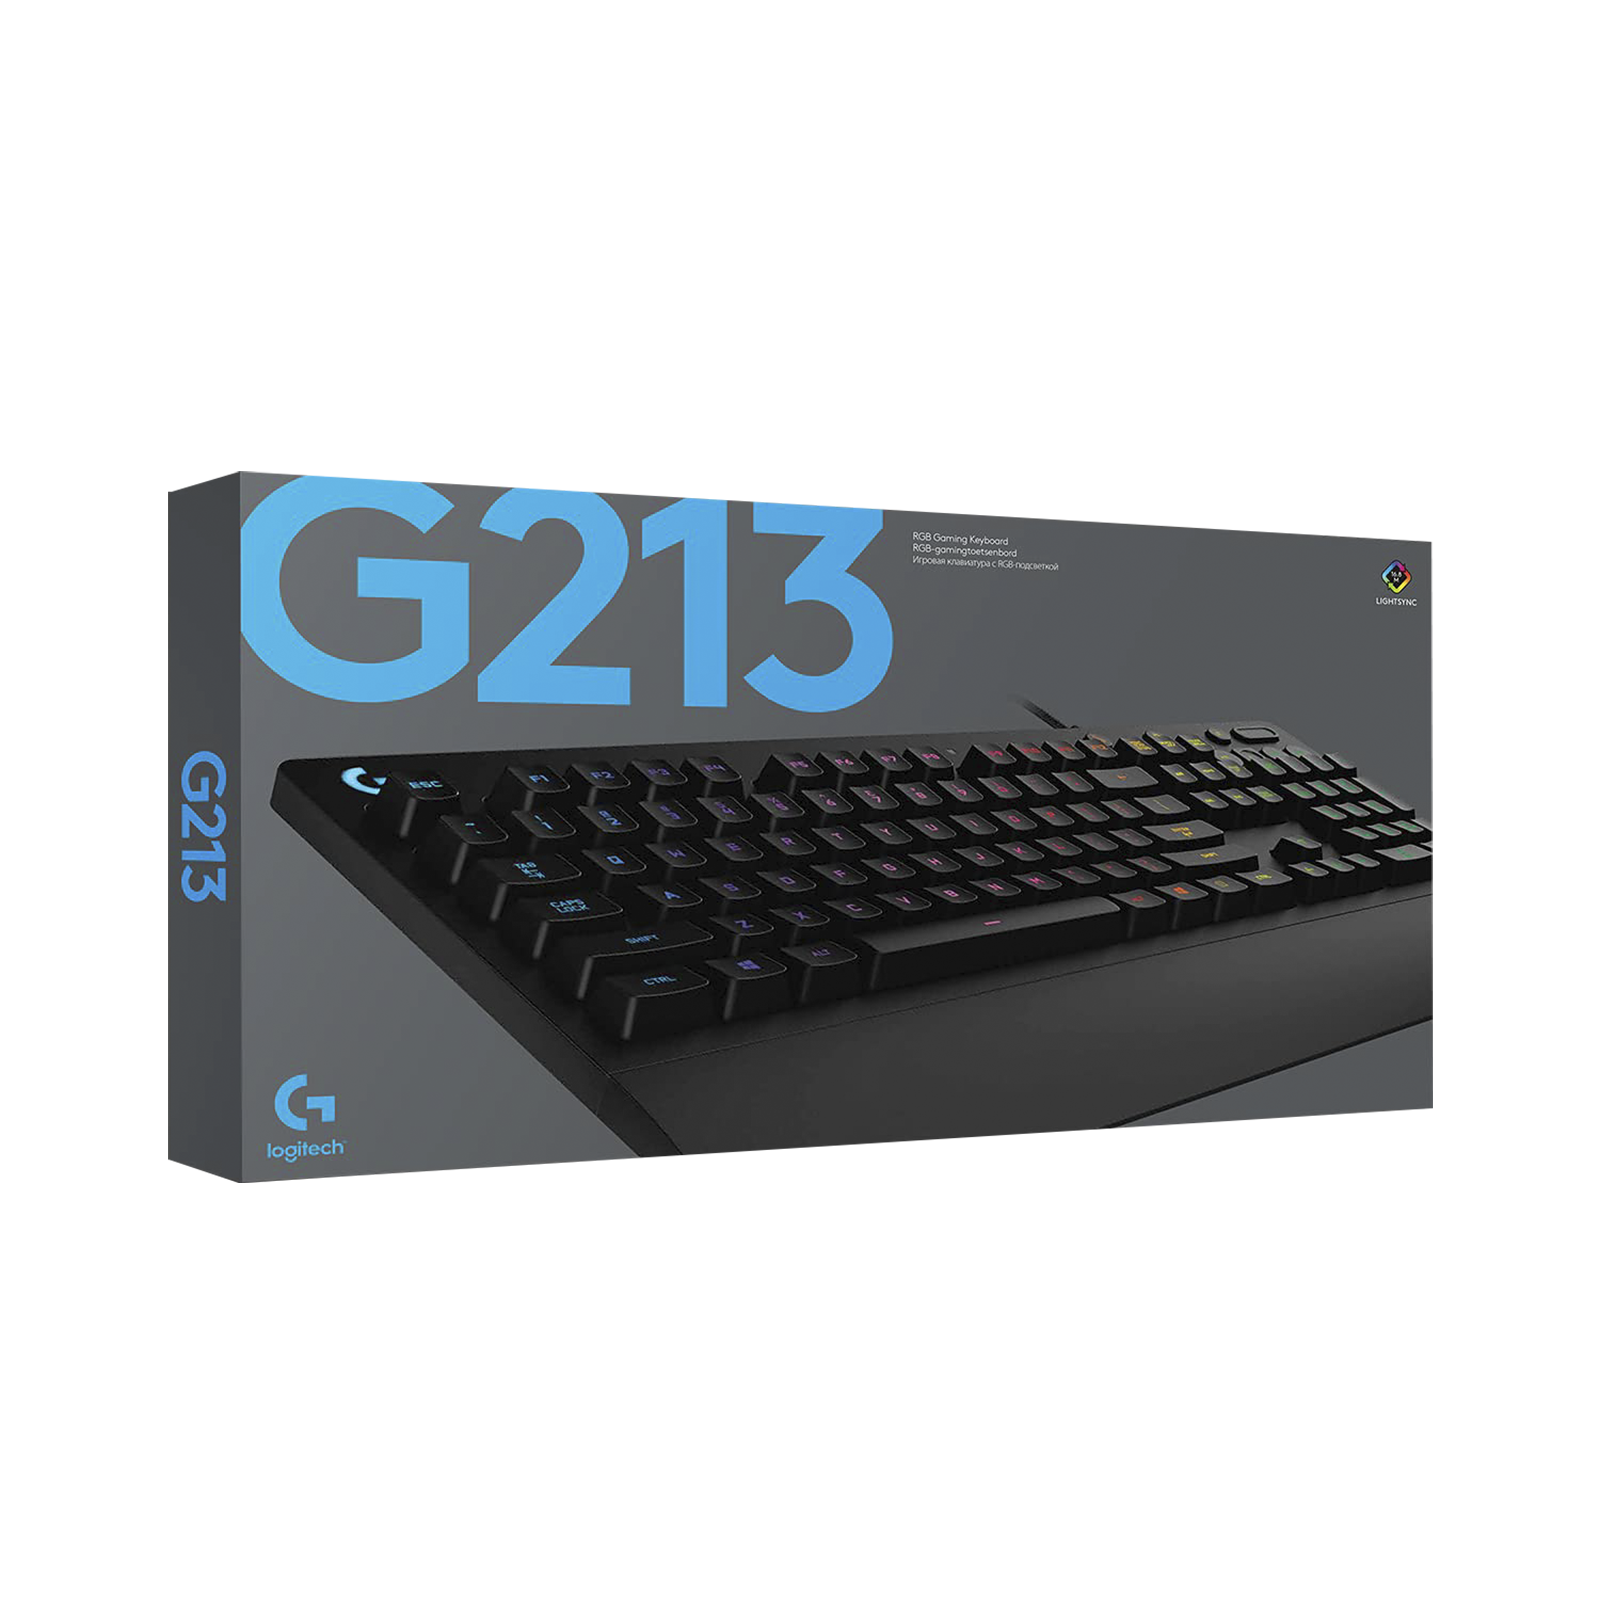 Clavier gaming G213 Prodigy RGB, Logitech veut frapper fort ? - GinjFo